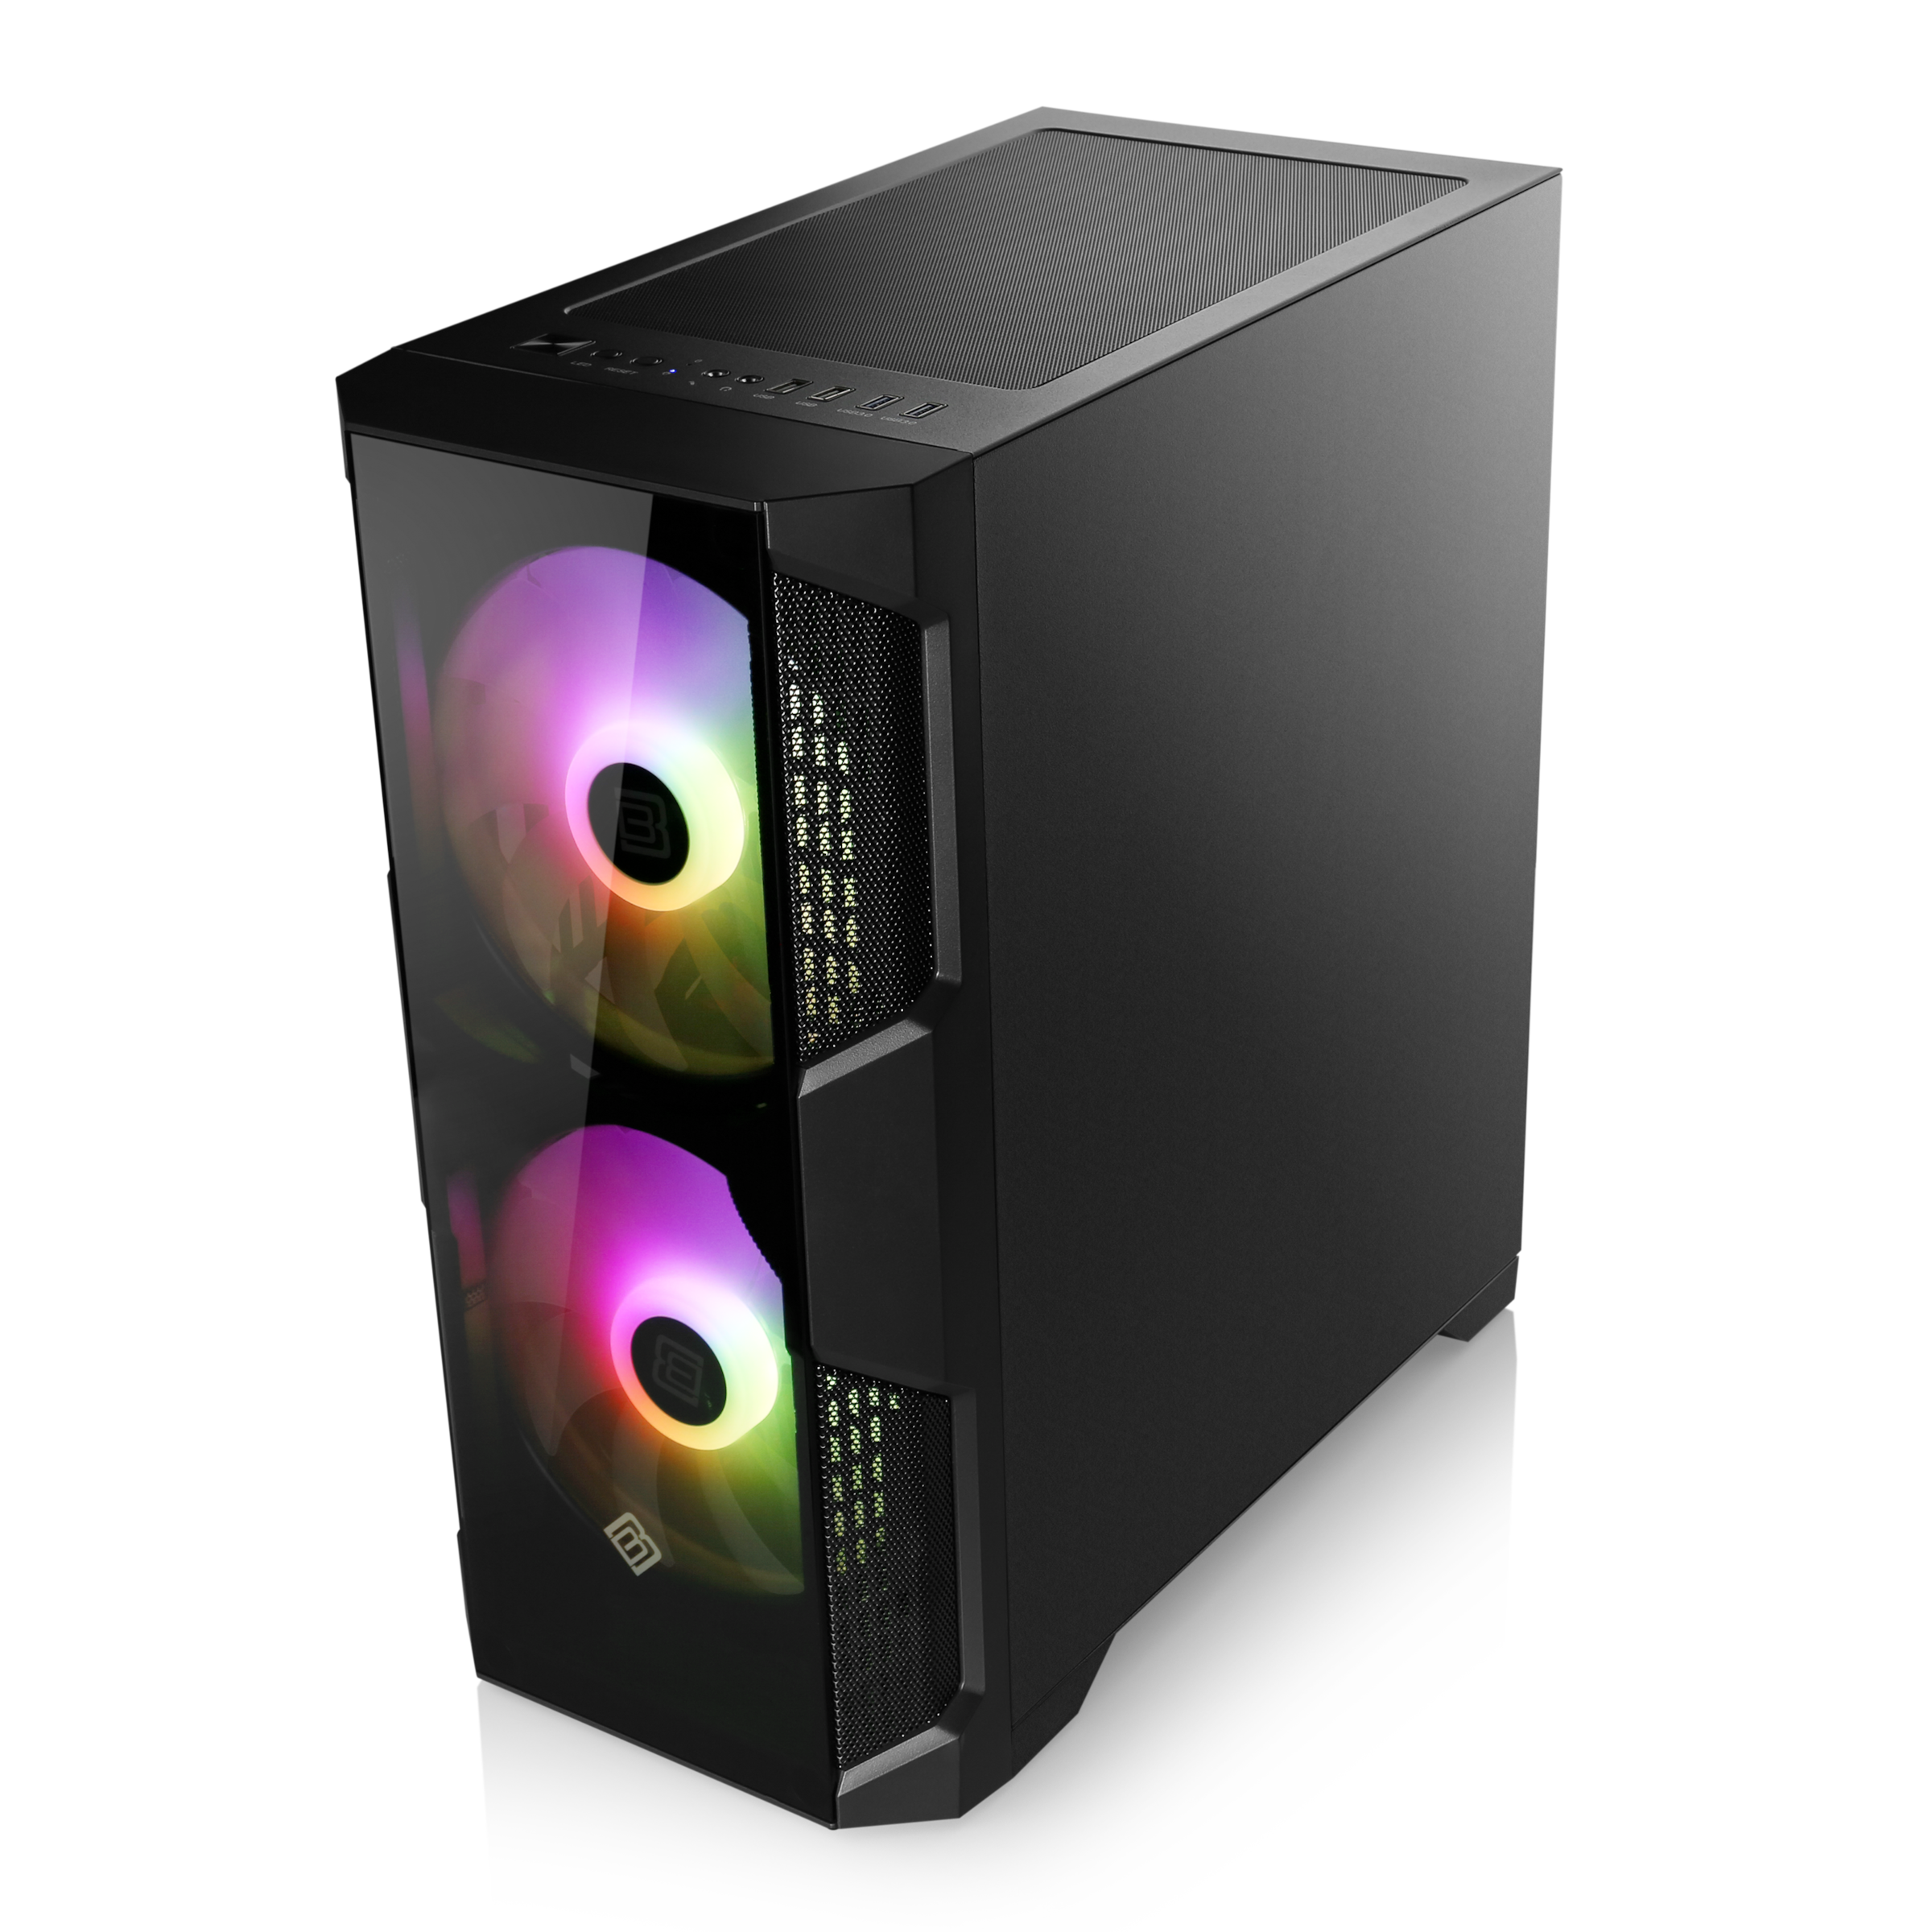 CSL Gaming-PC-Komplettsystem »RGB Edition V28717«